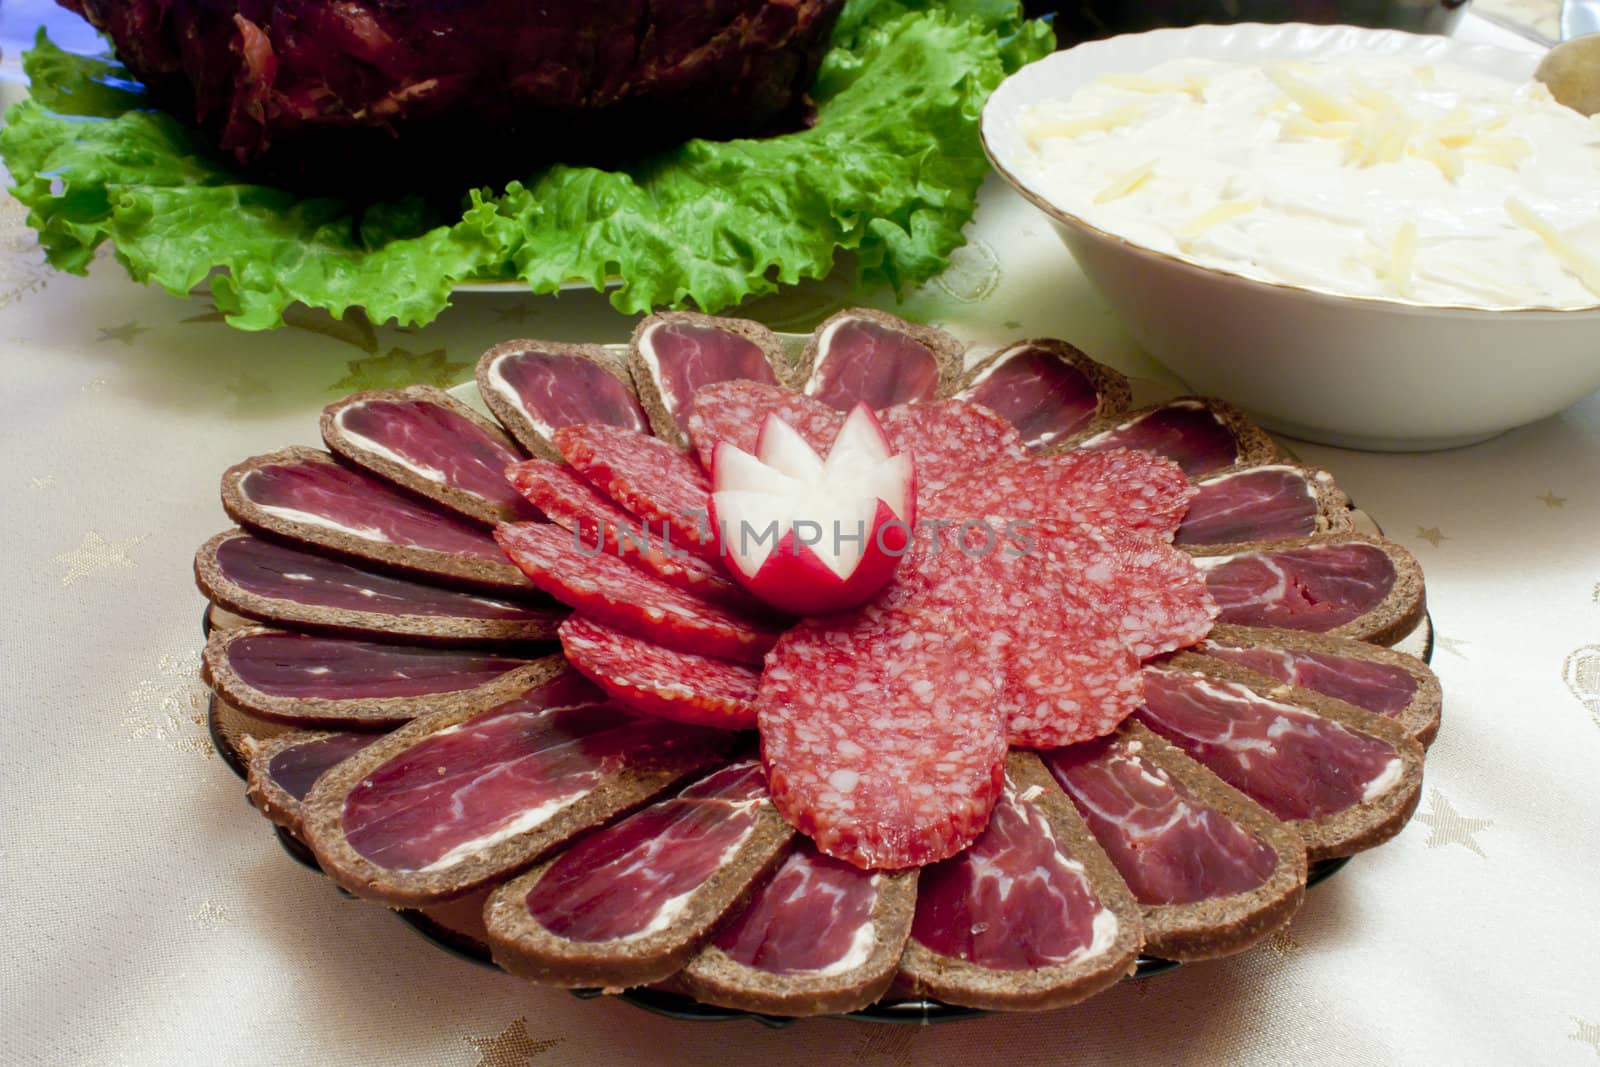 Basturma: a kind of cured Armenian meat.